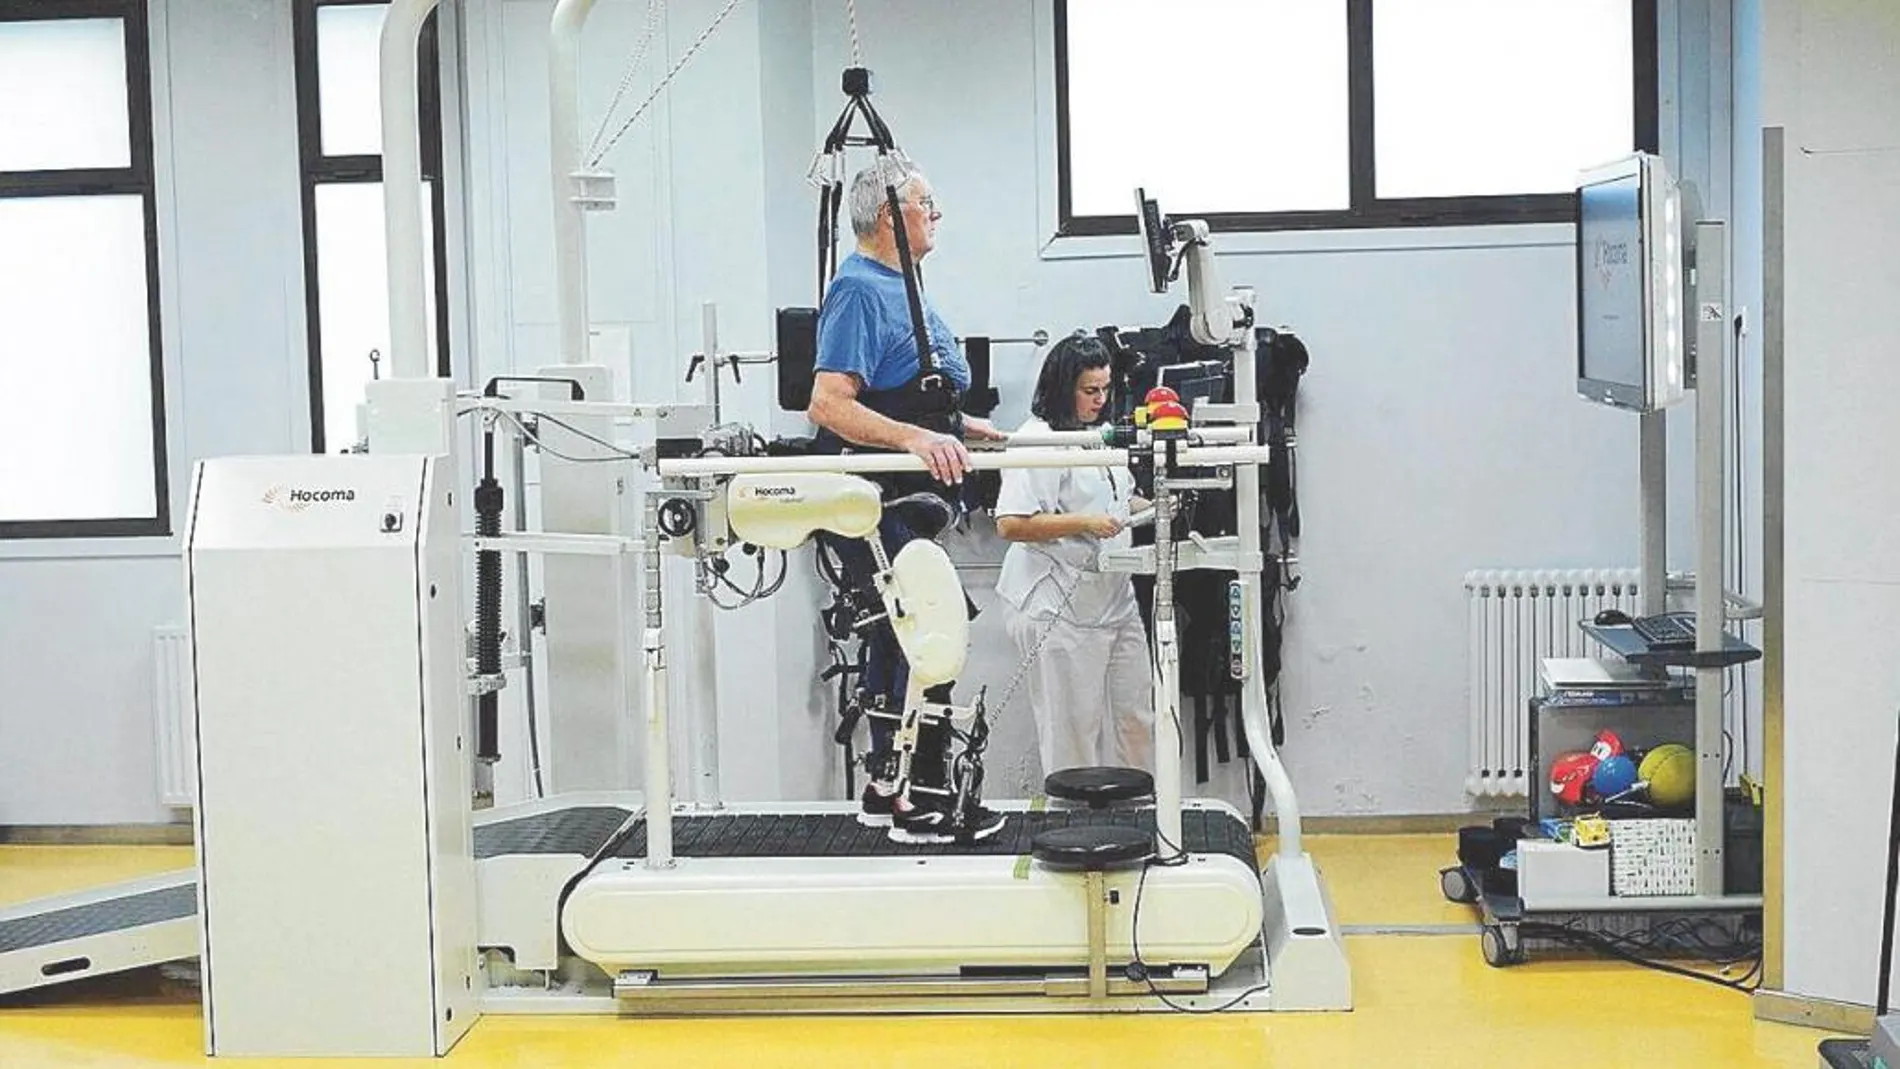 Rehabilitación robotizada para revertir el daño cerebral adquirido